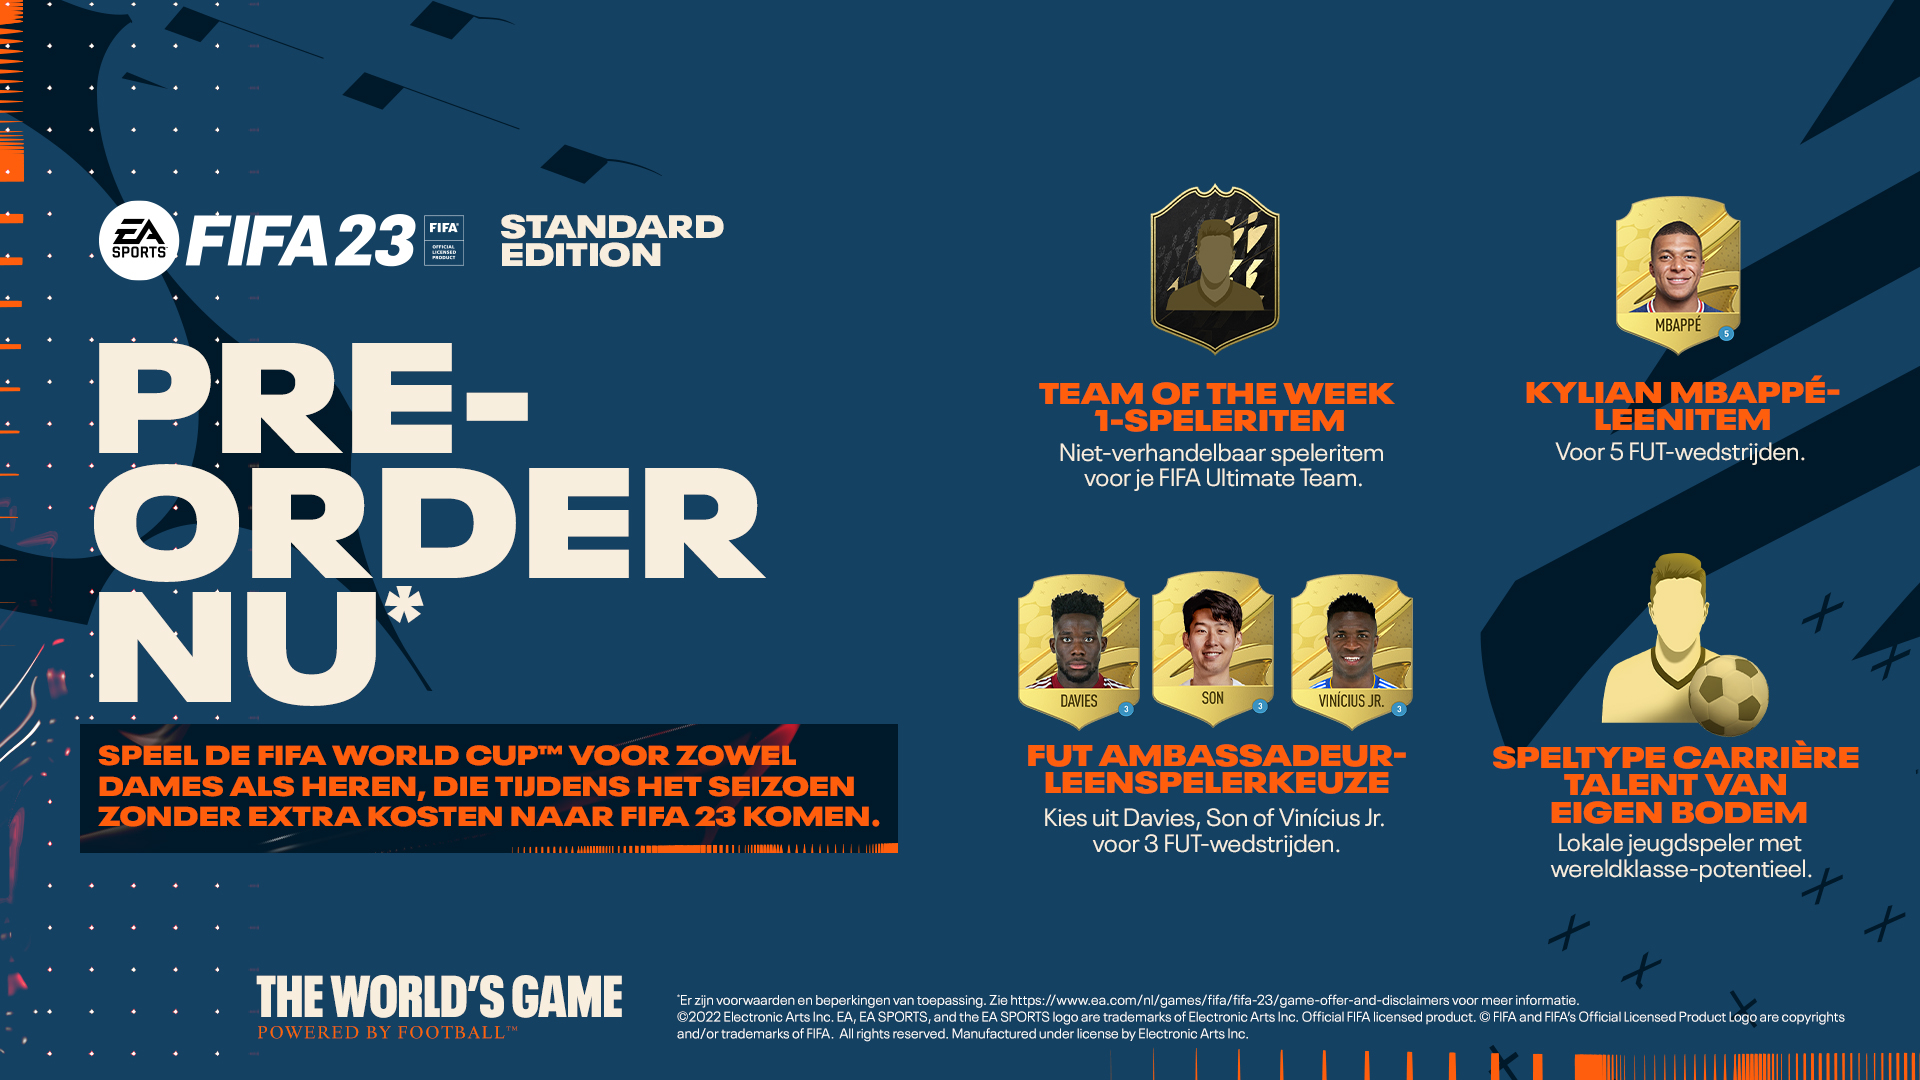 FIFA 23: Standard Edition - PC (Code in a Box)